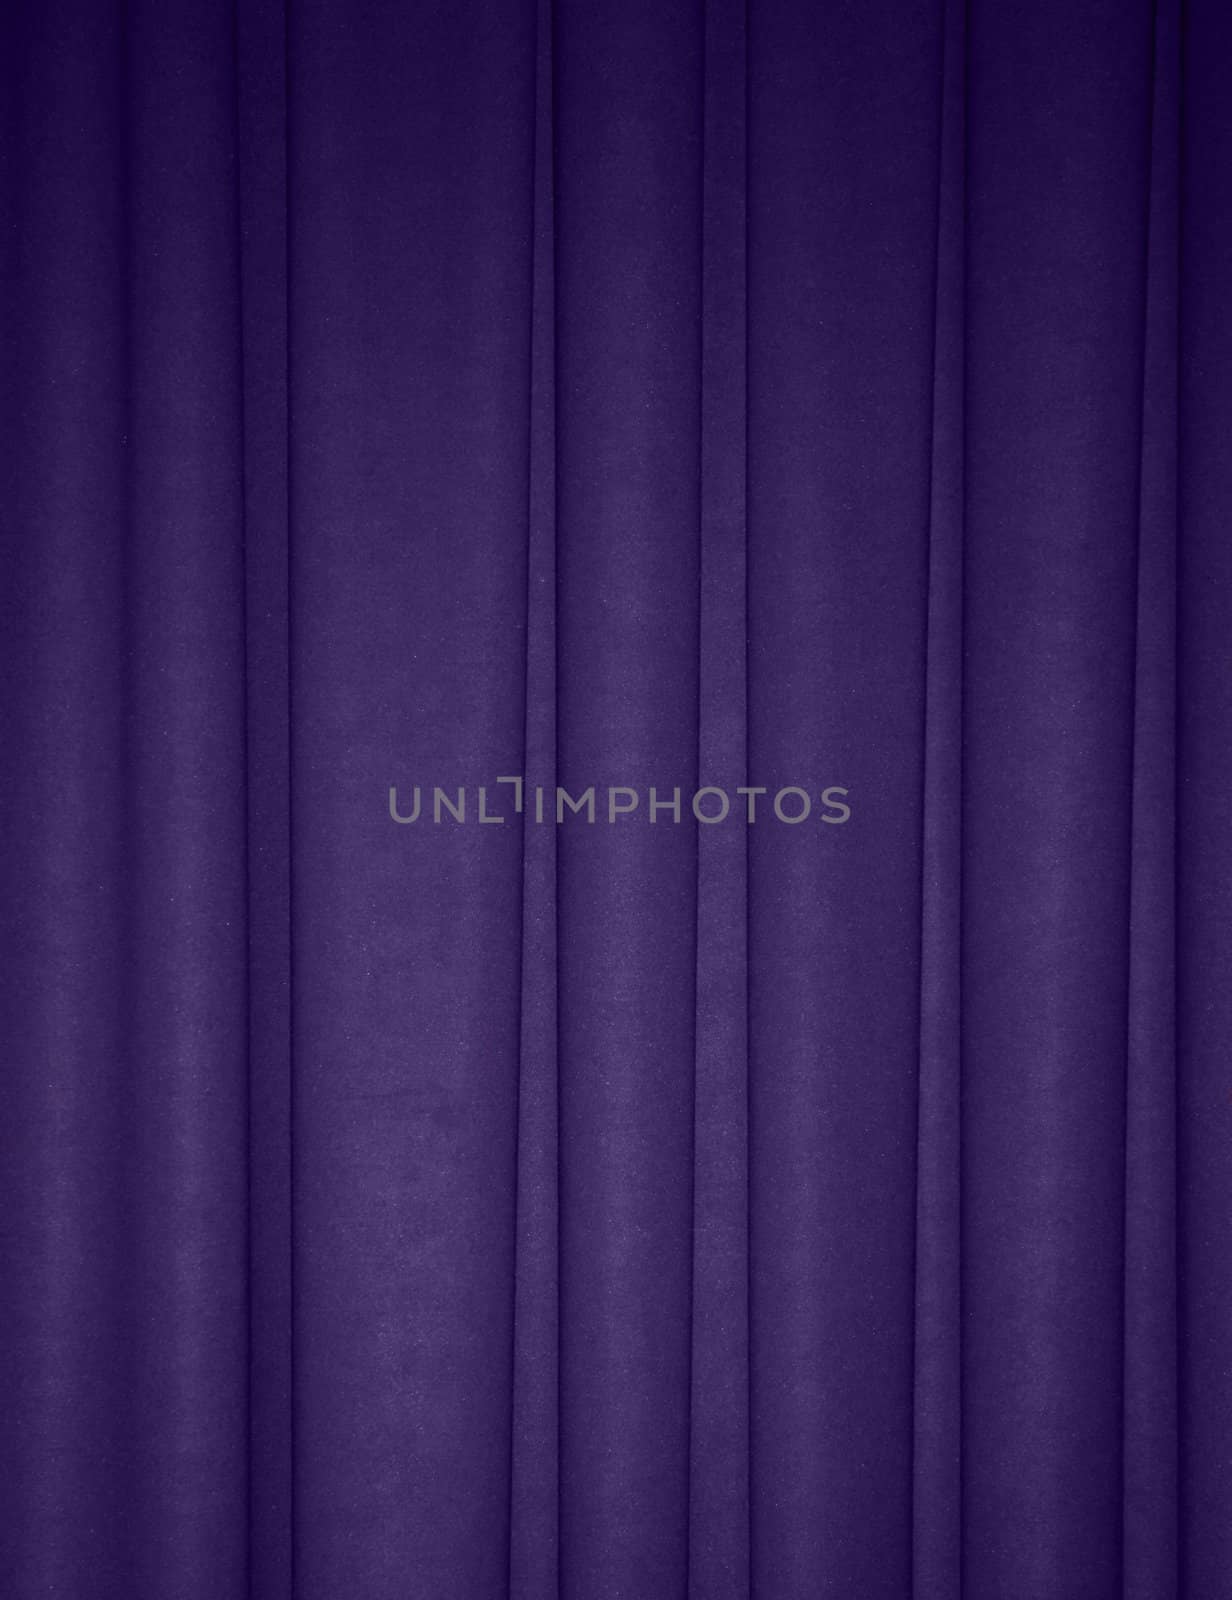 Deep purple draped background